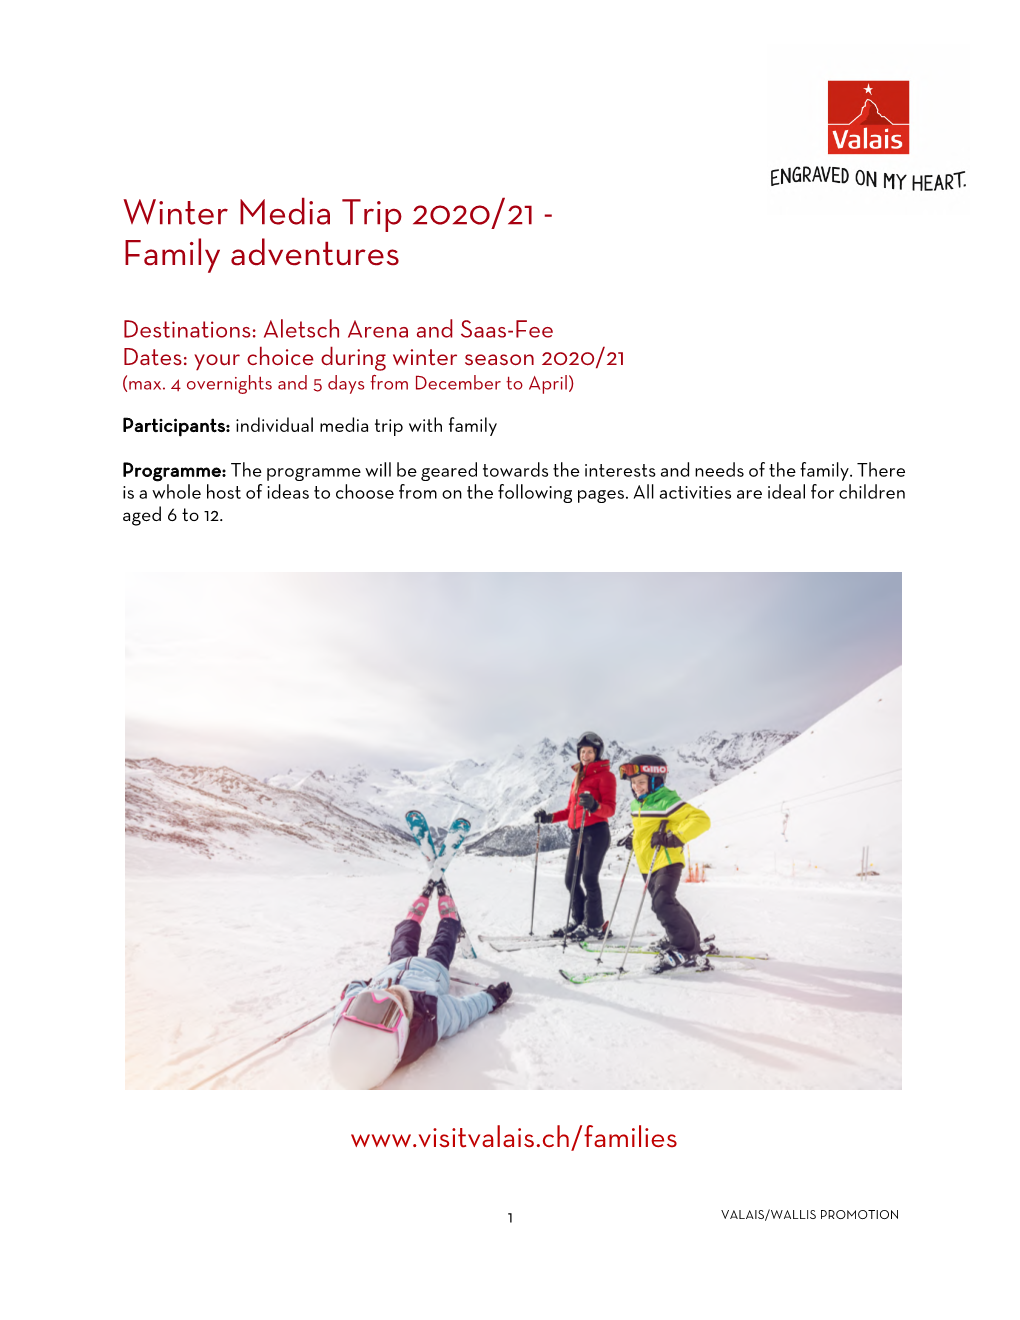 Winter Media Trip 2020/21 - Family Adventures